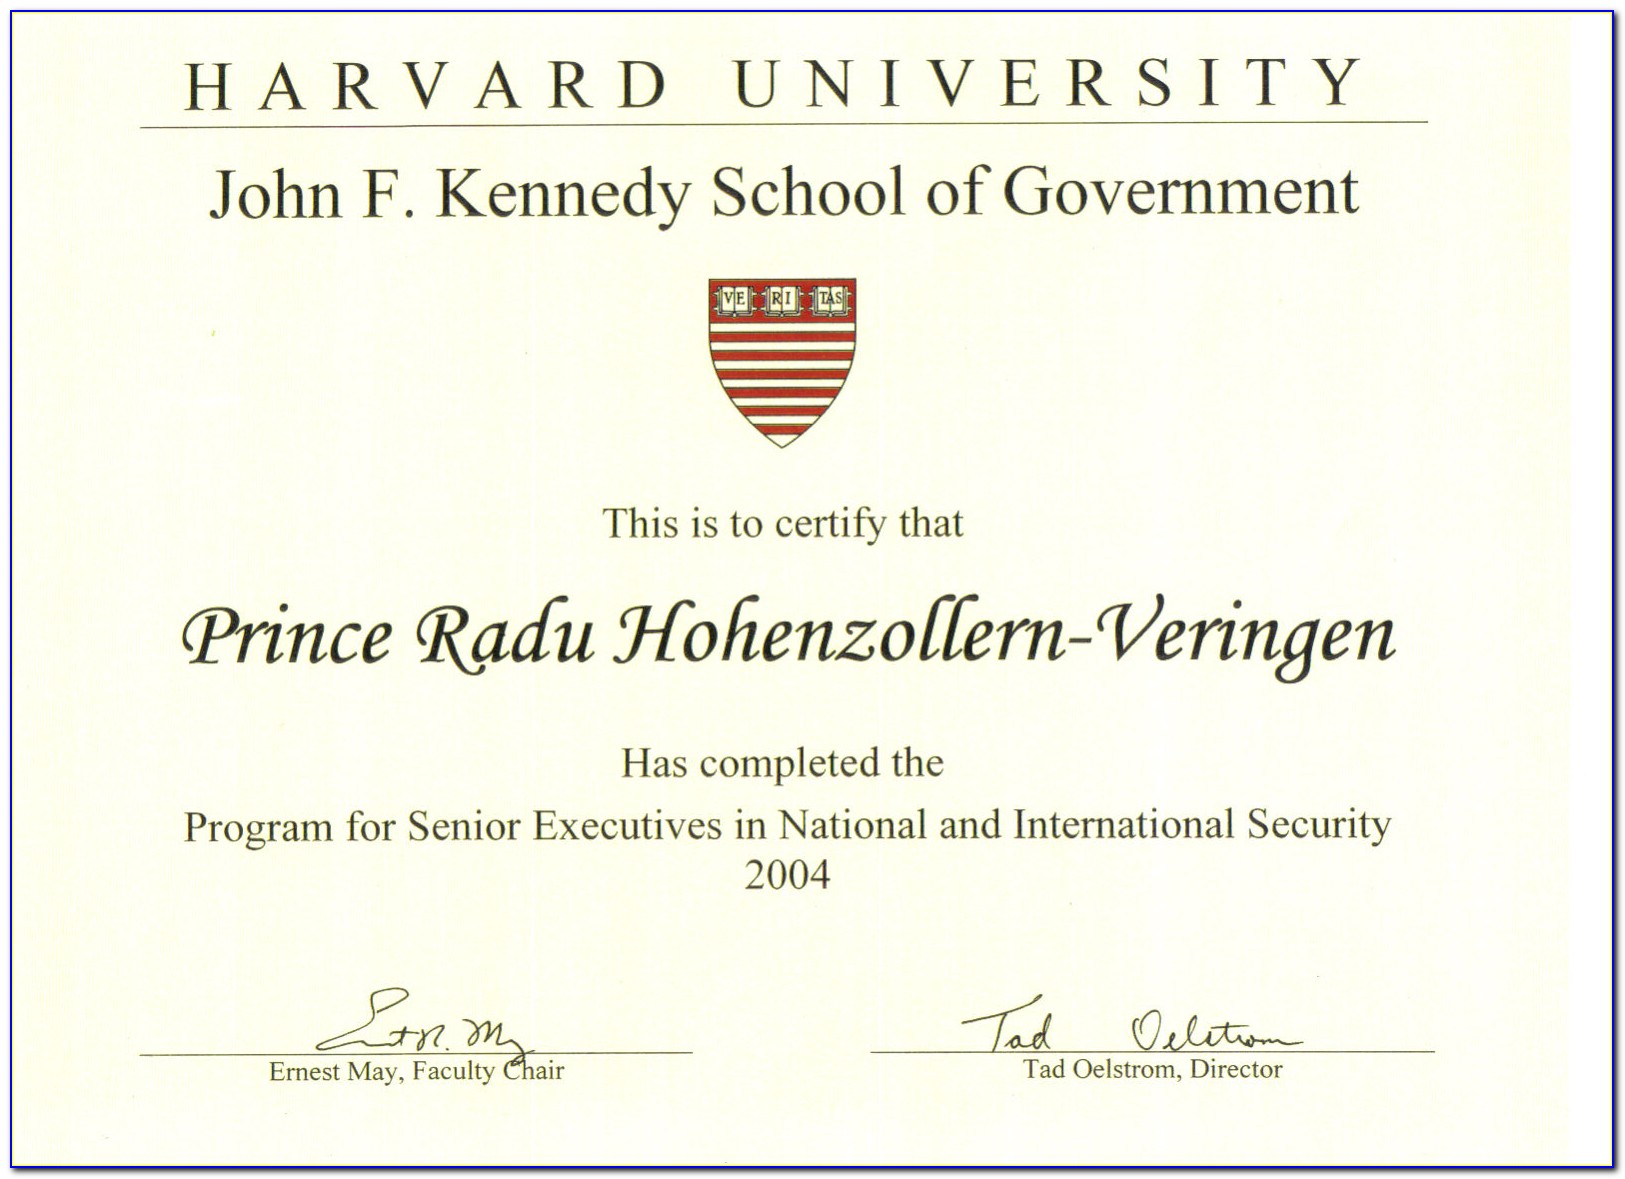 Harvard Professional Certificate In Data Science Review